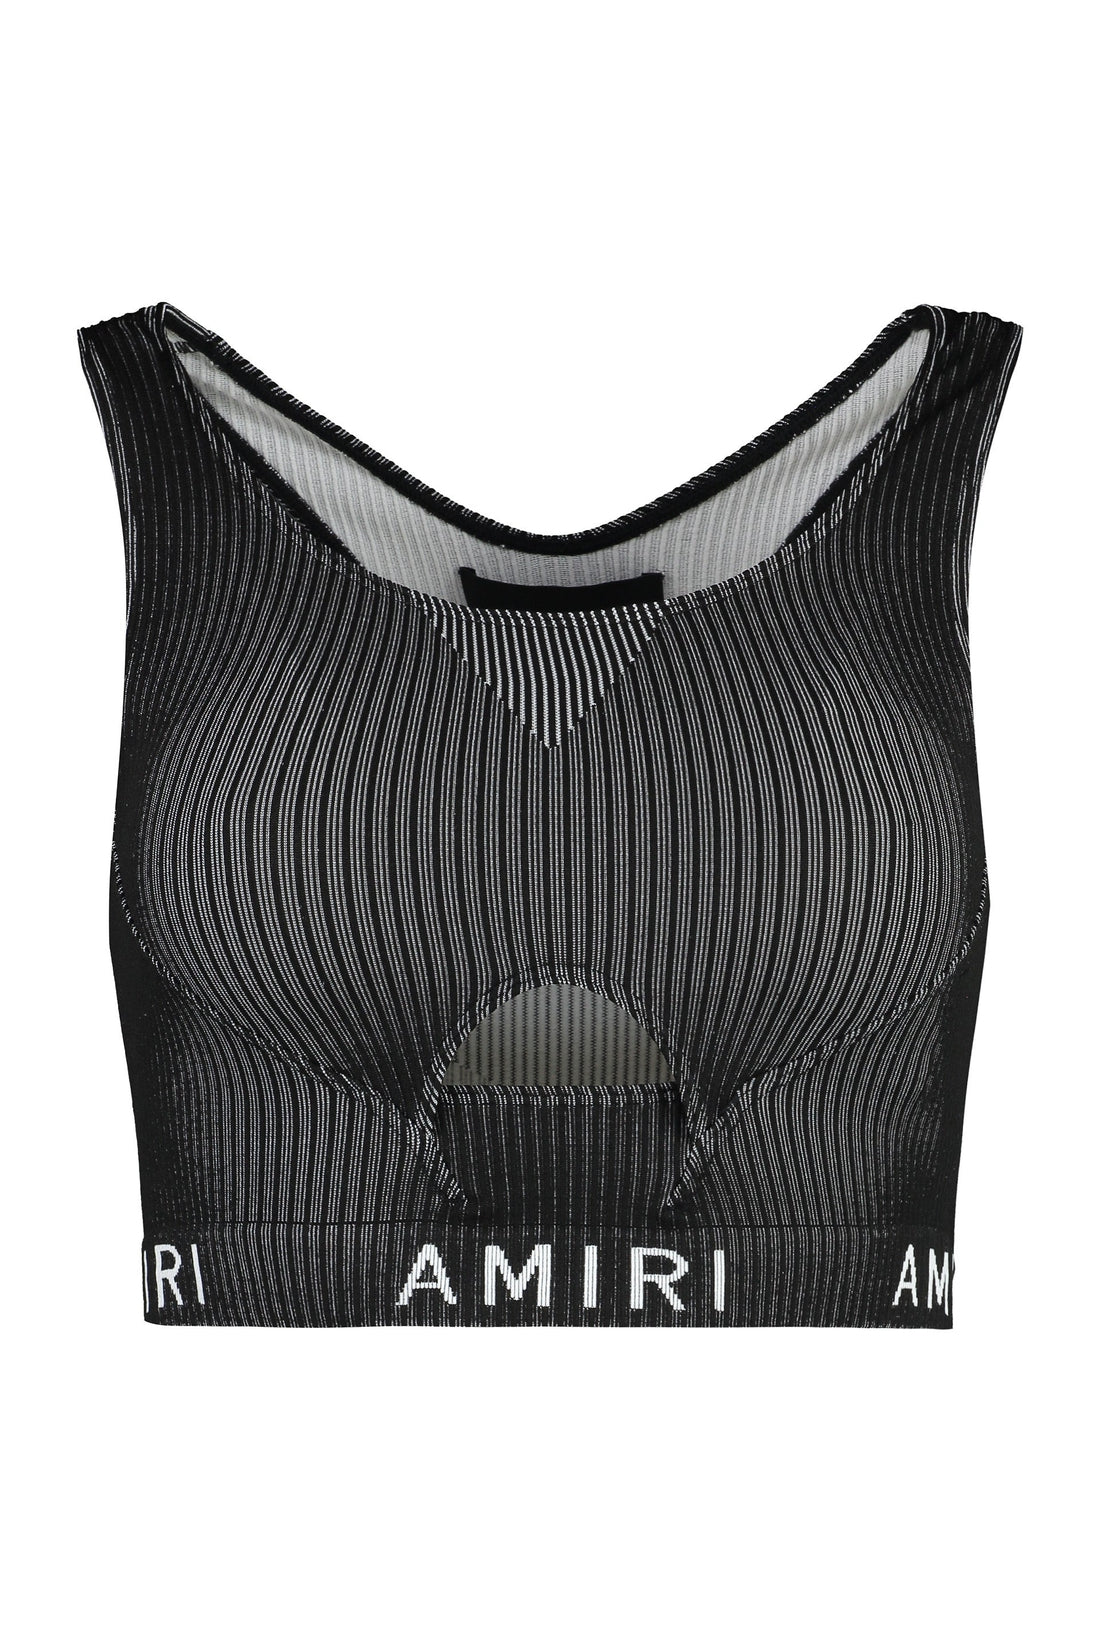 AMIRI-OUTLET-SALE-Technical fabric top-ARCHIVIST